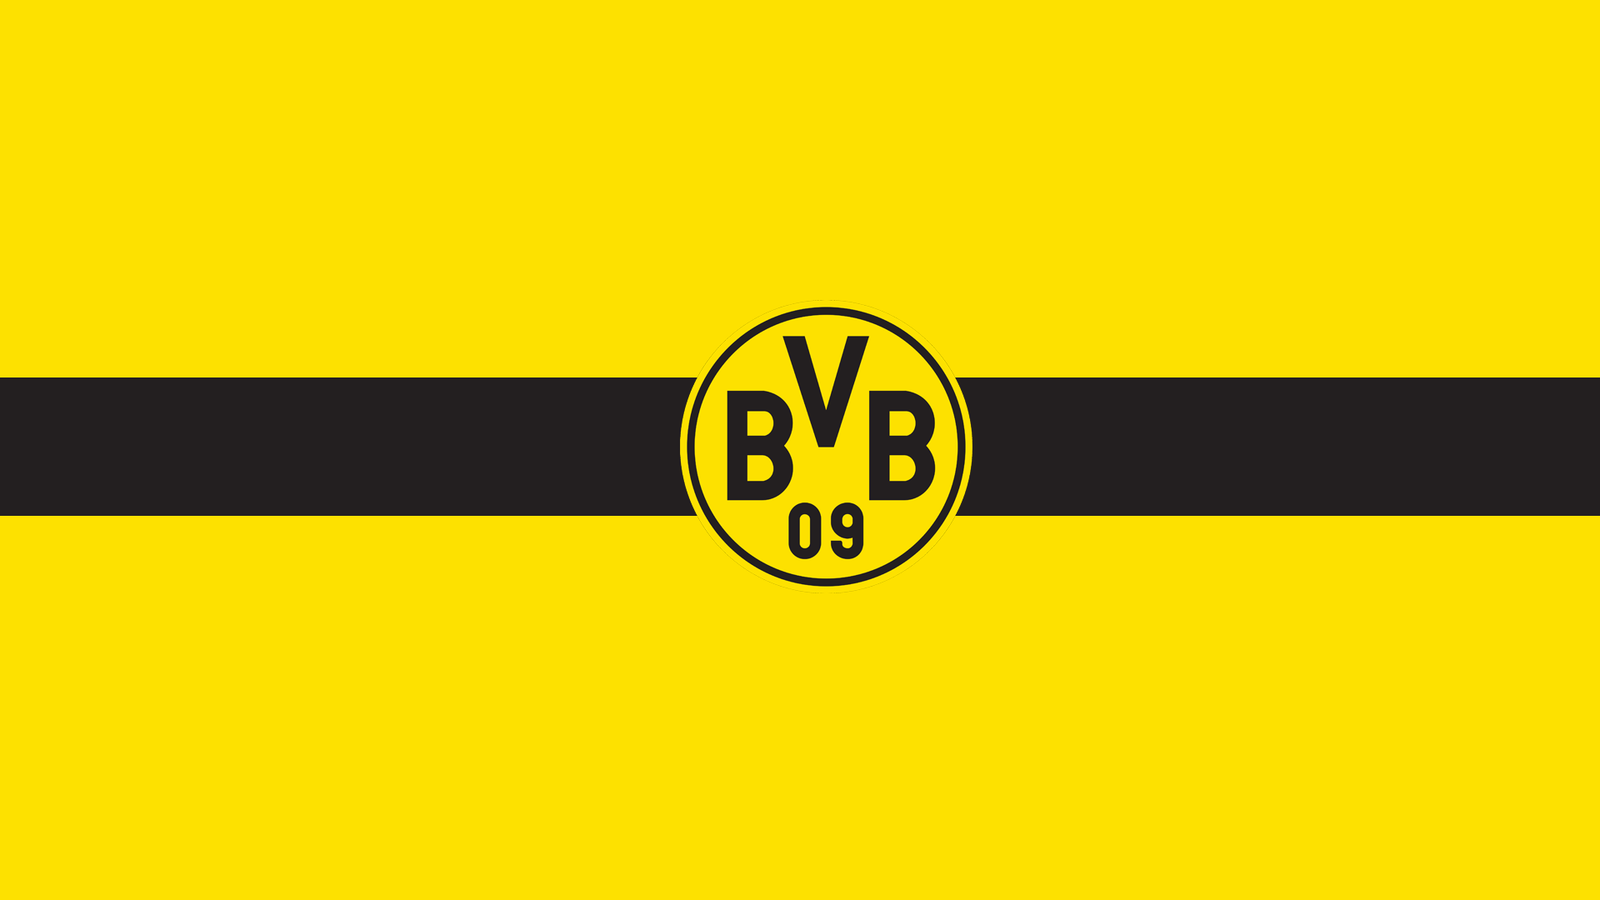 bvb wallpaper,amarillo,fuente,texto,bandera,línea